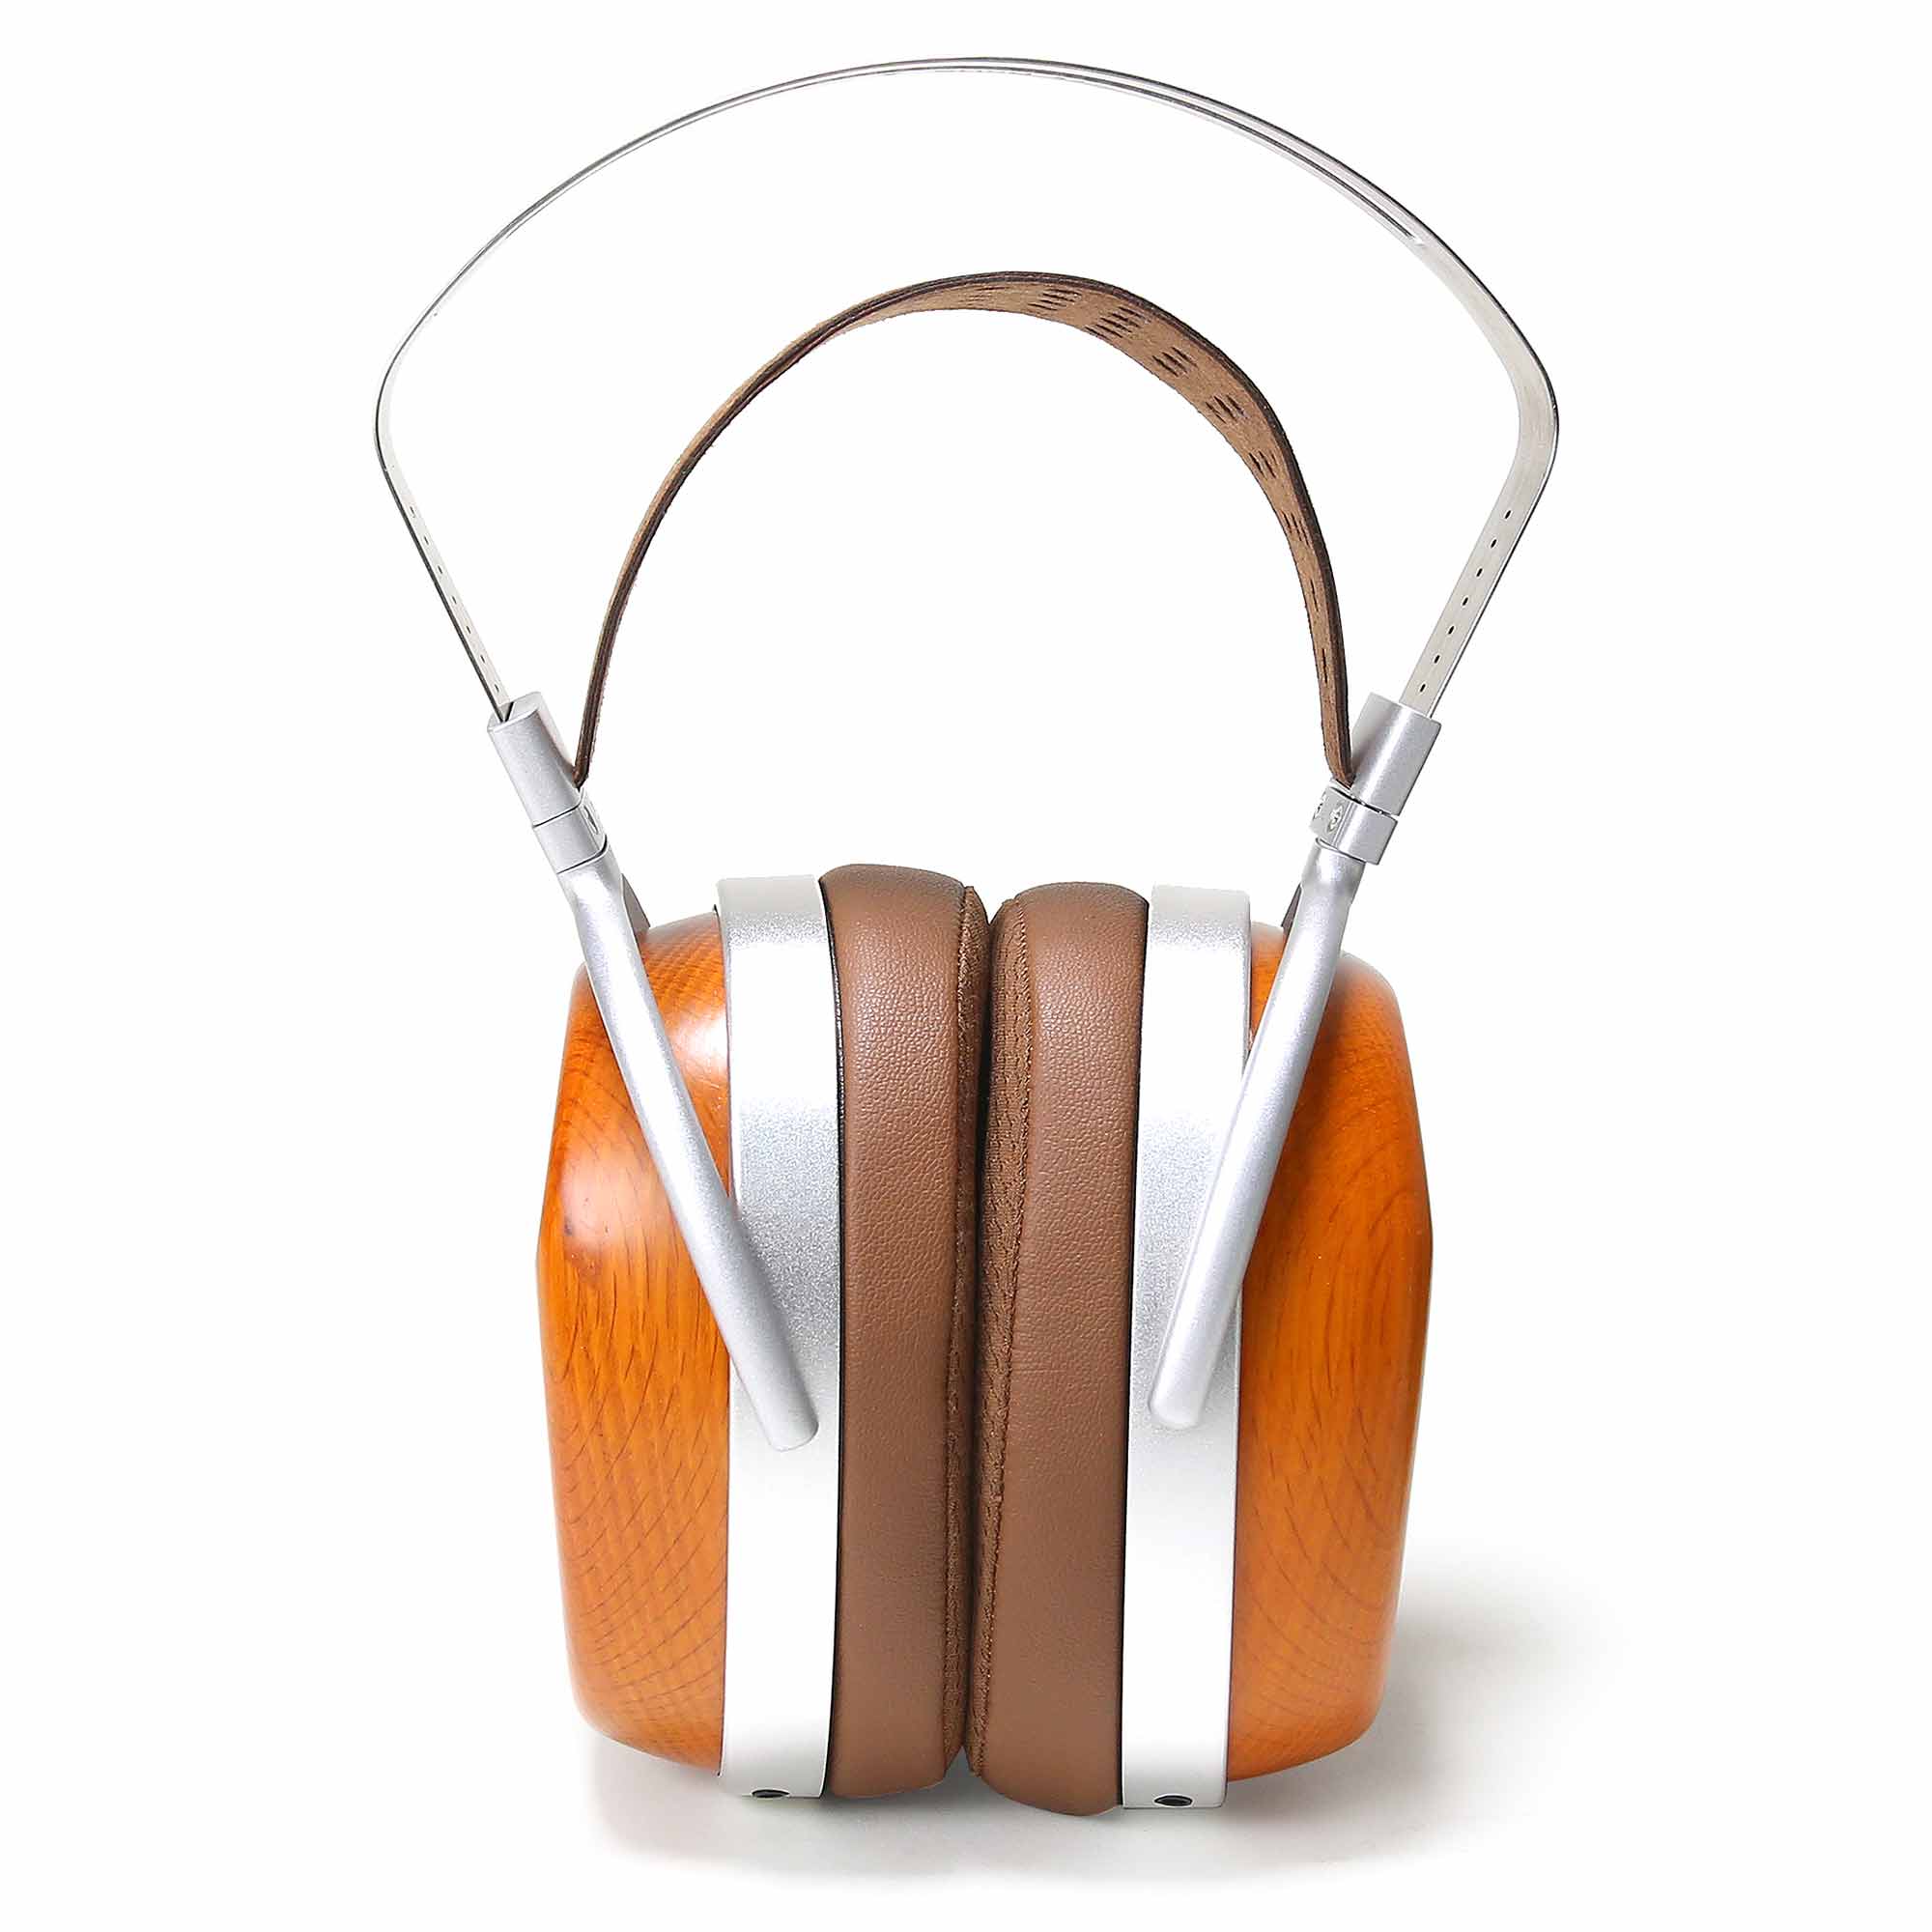 HIFIMAN Audivina Closed-Back Planar Headphone